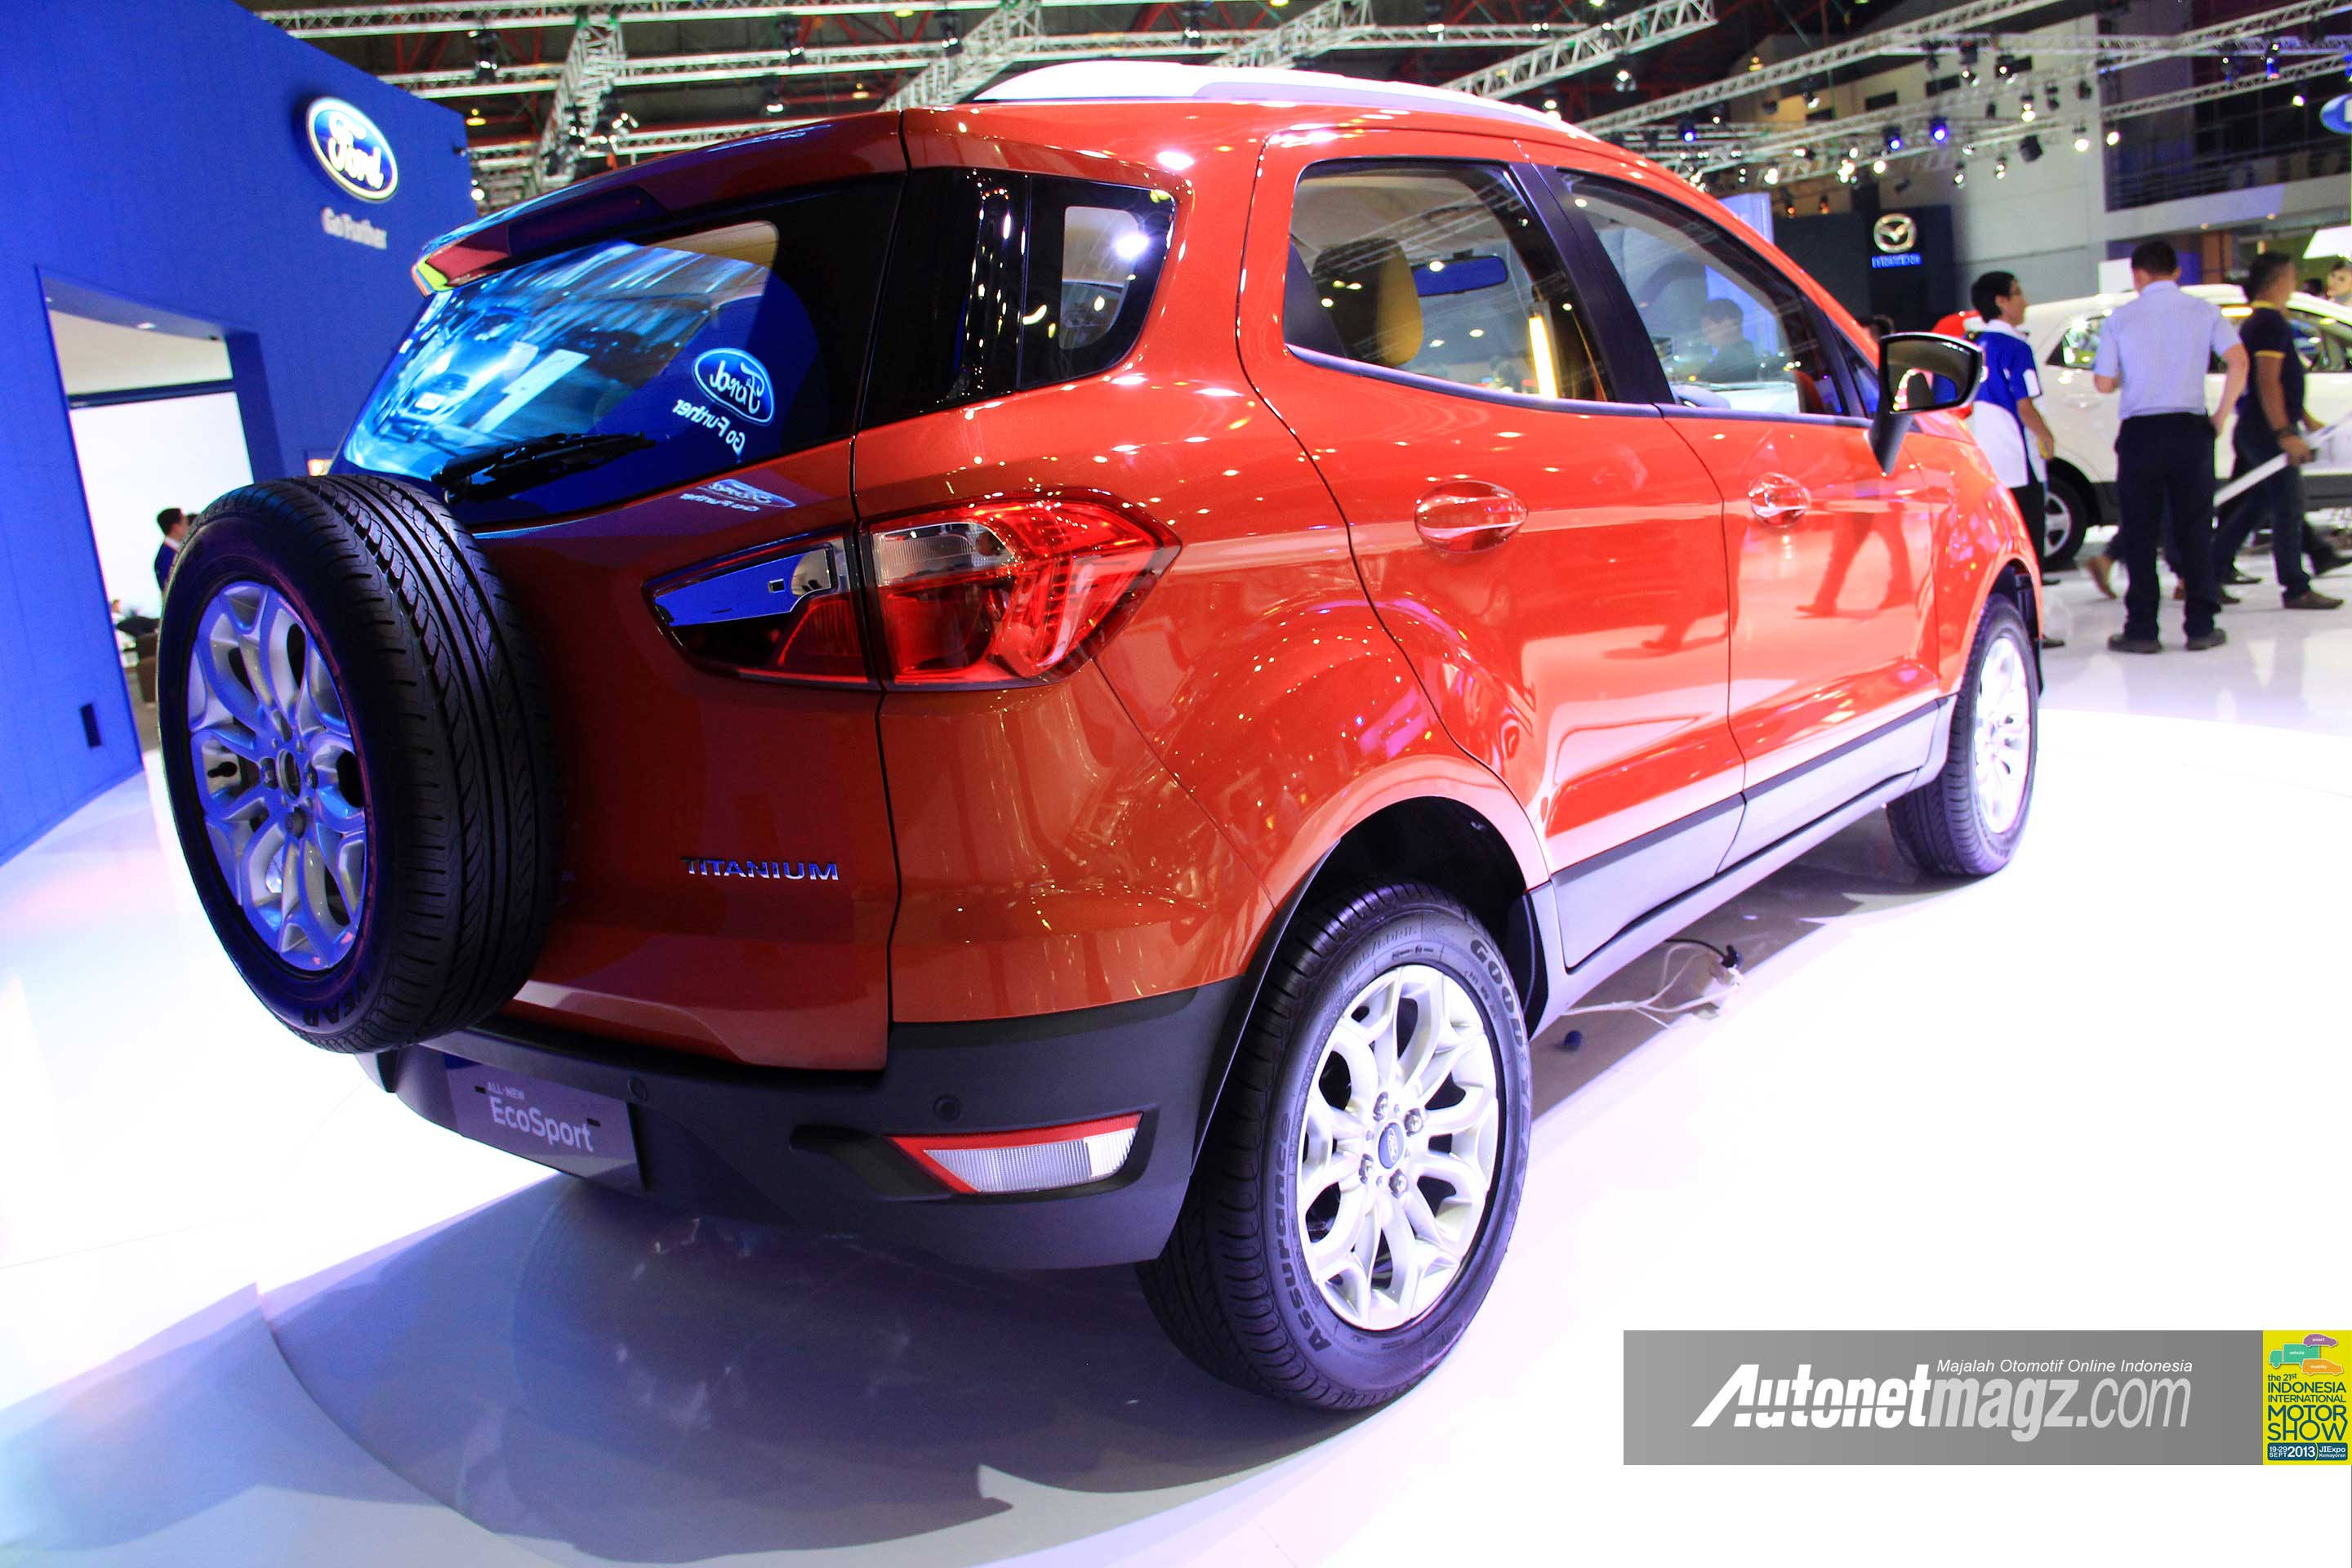  Ford  EcoSport  AutonetMagz Review Mobil dan Motor Baru 